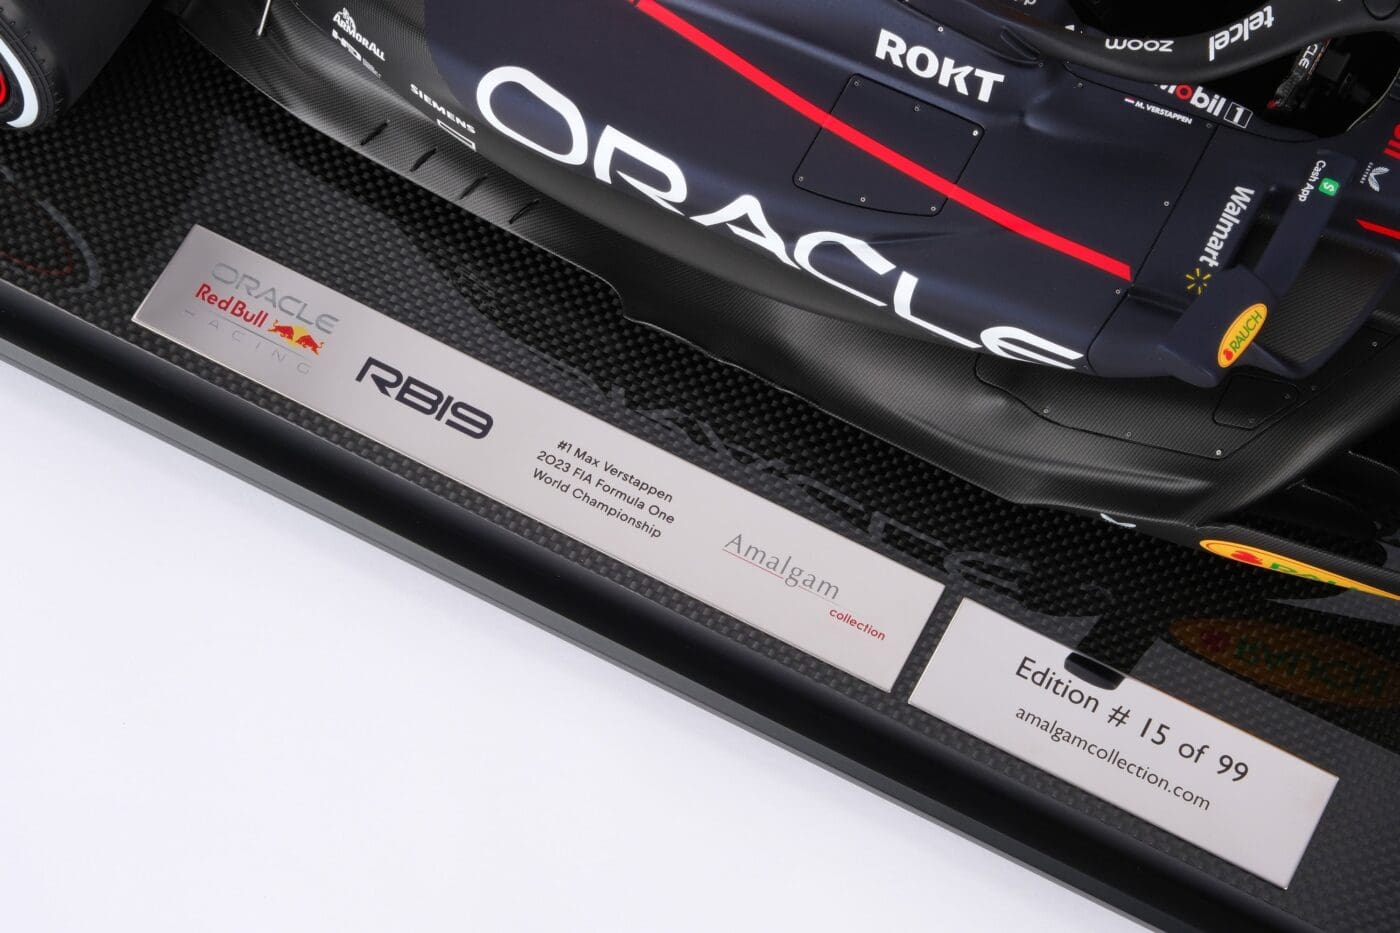 Amalgam's New $10K 1:8 Oracle Red Bull Racing RB19 Model Celebrates The  2023 F1 Season